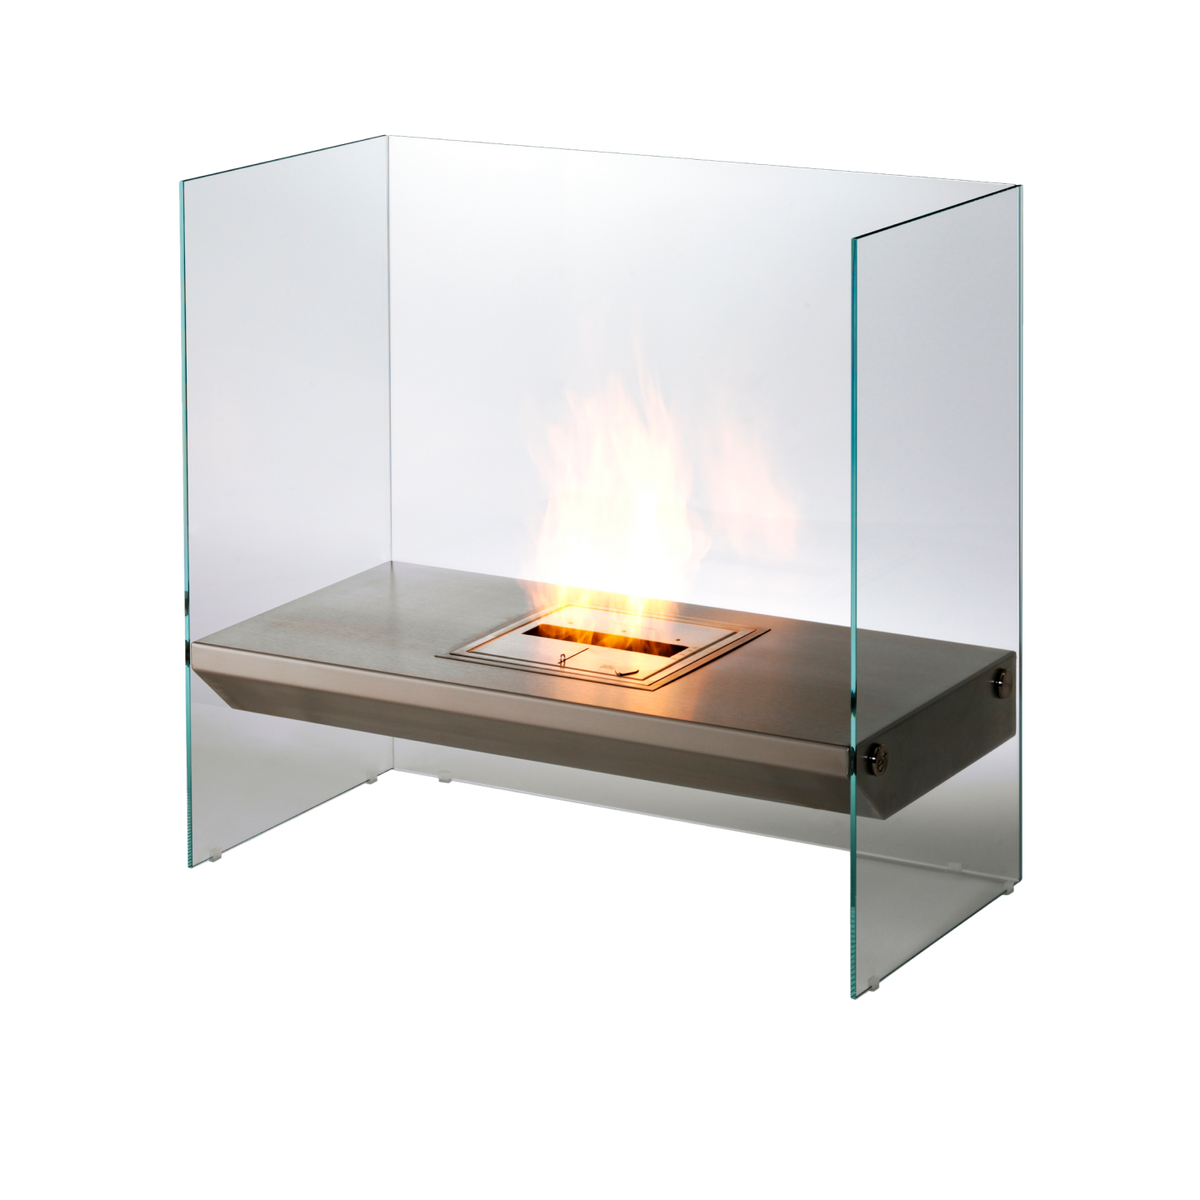 IGLOO | バイオエタノール暖炉「EcoSmart Fire」